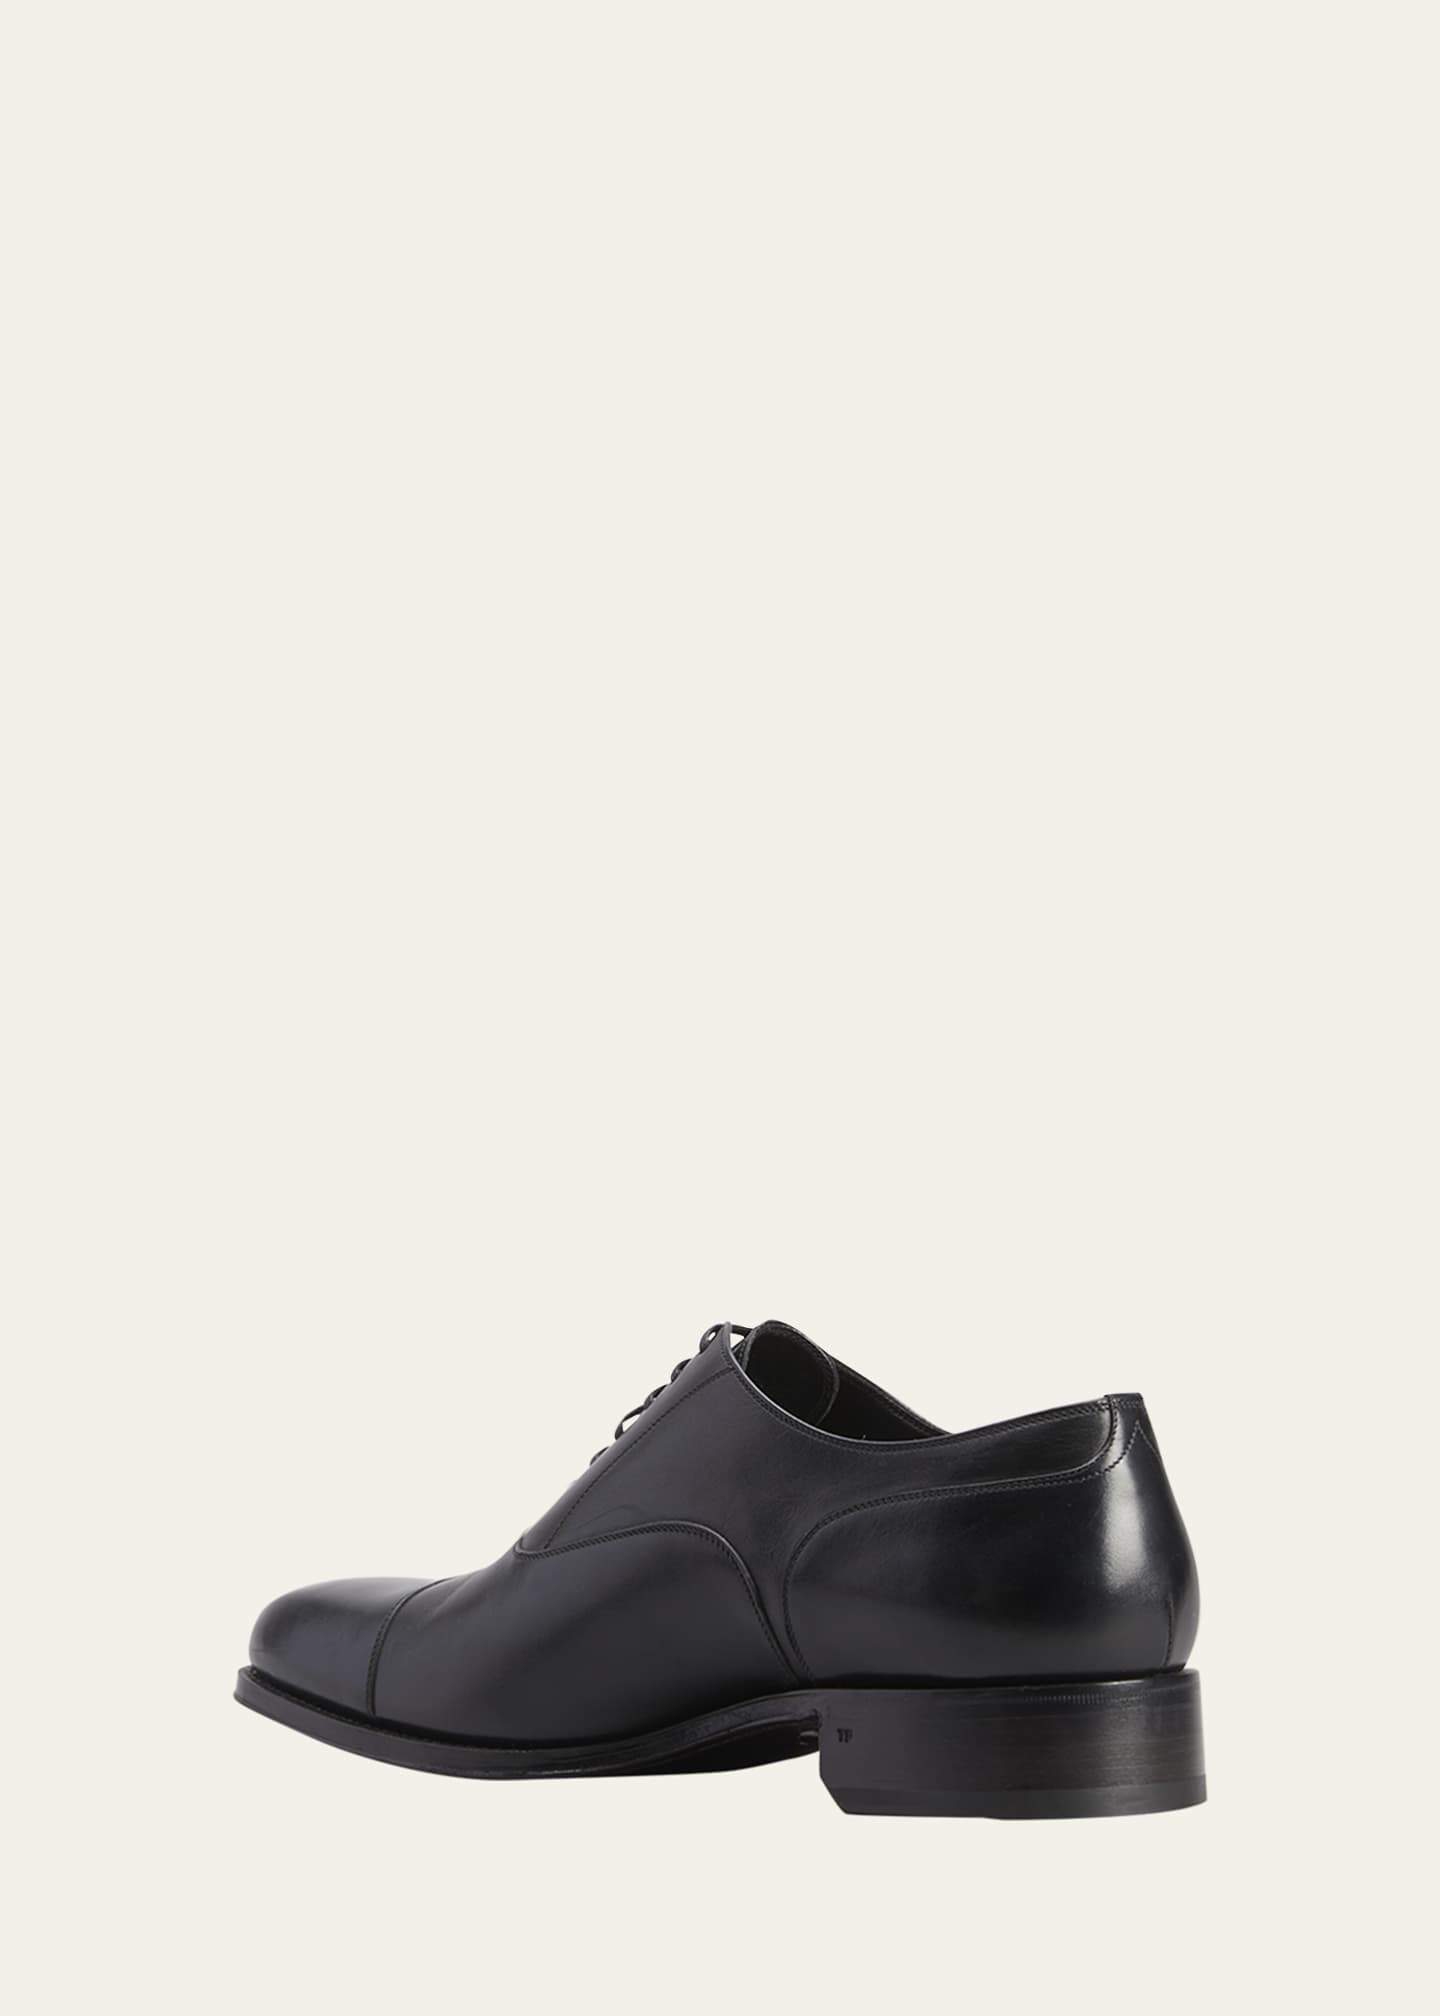 TOM FORD Men's Clayton Cap Toe Leather Oxfords - Bergdorf Goodman